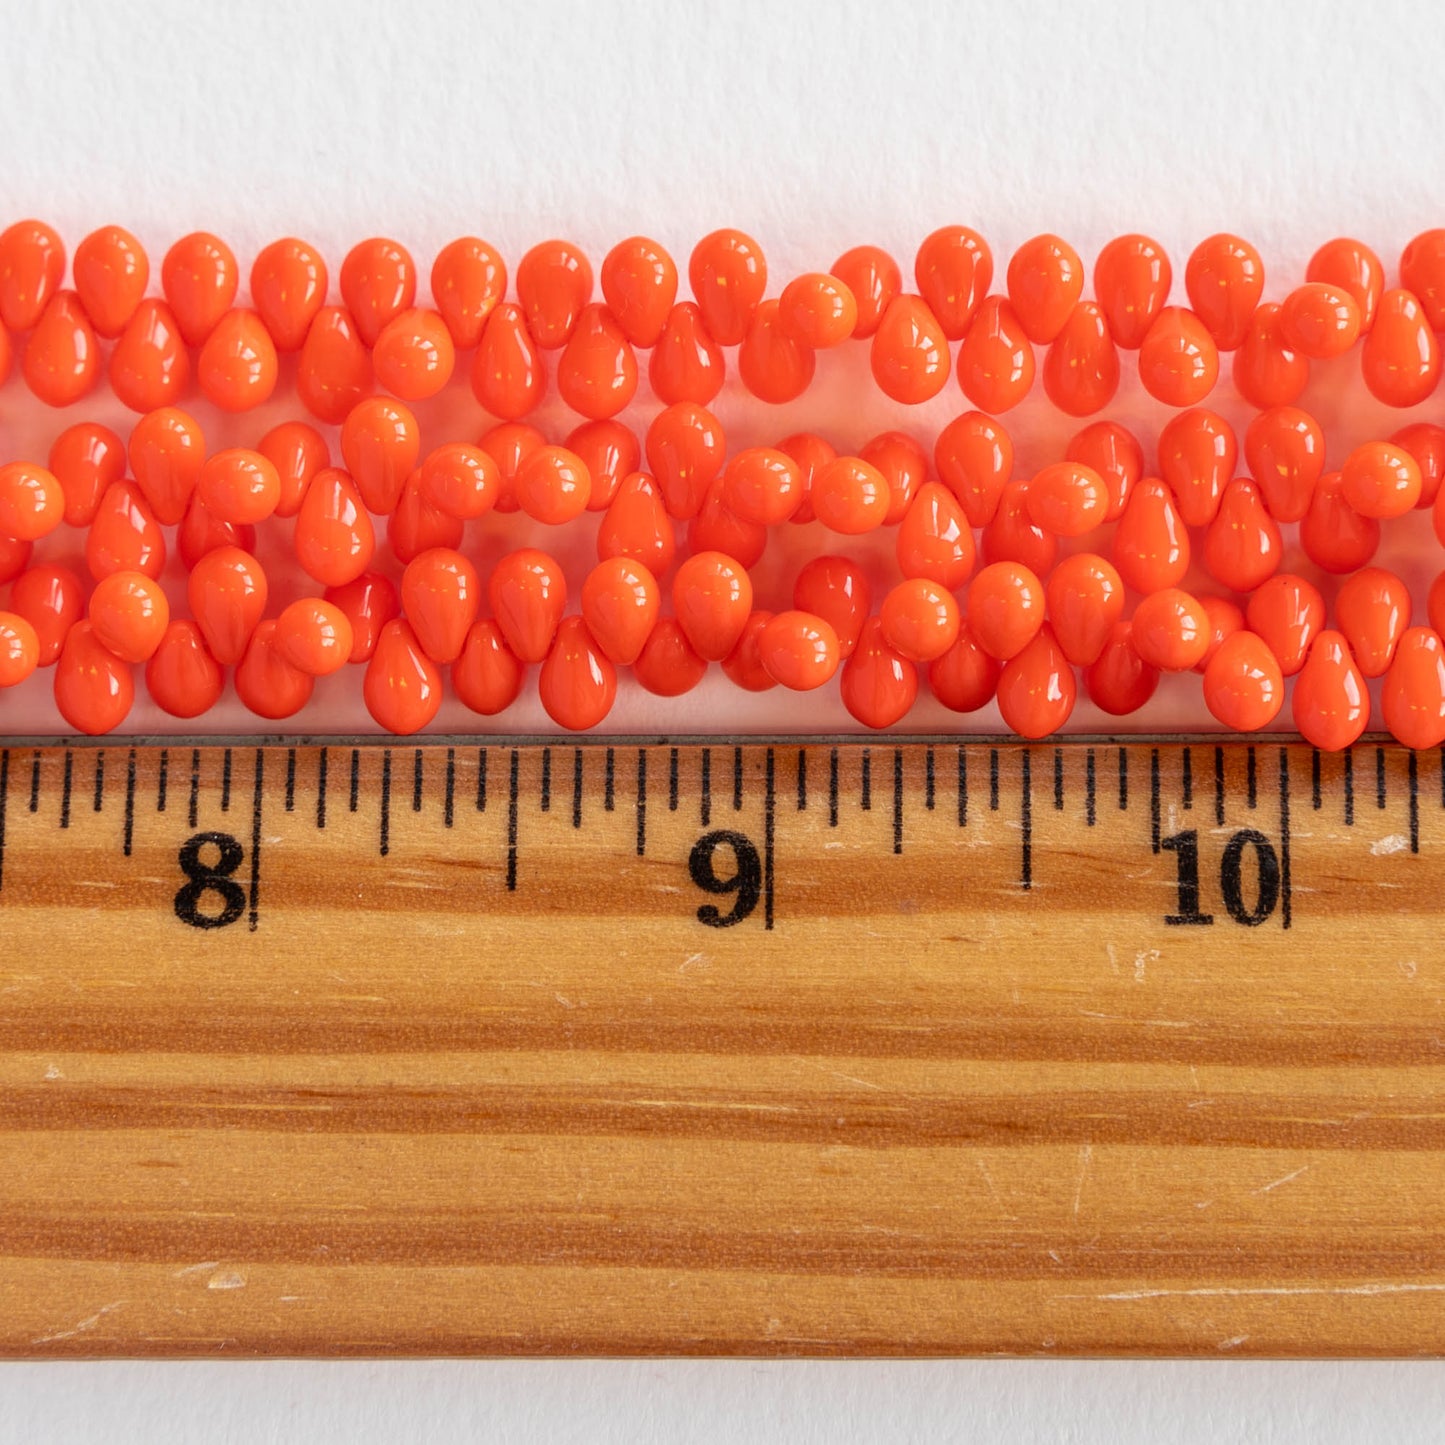 4x6mm Glass Teardrop Beads - Orange - 100 Beads